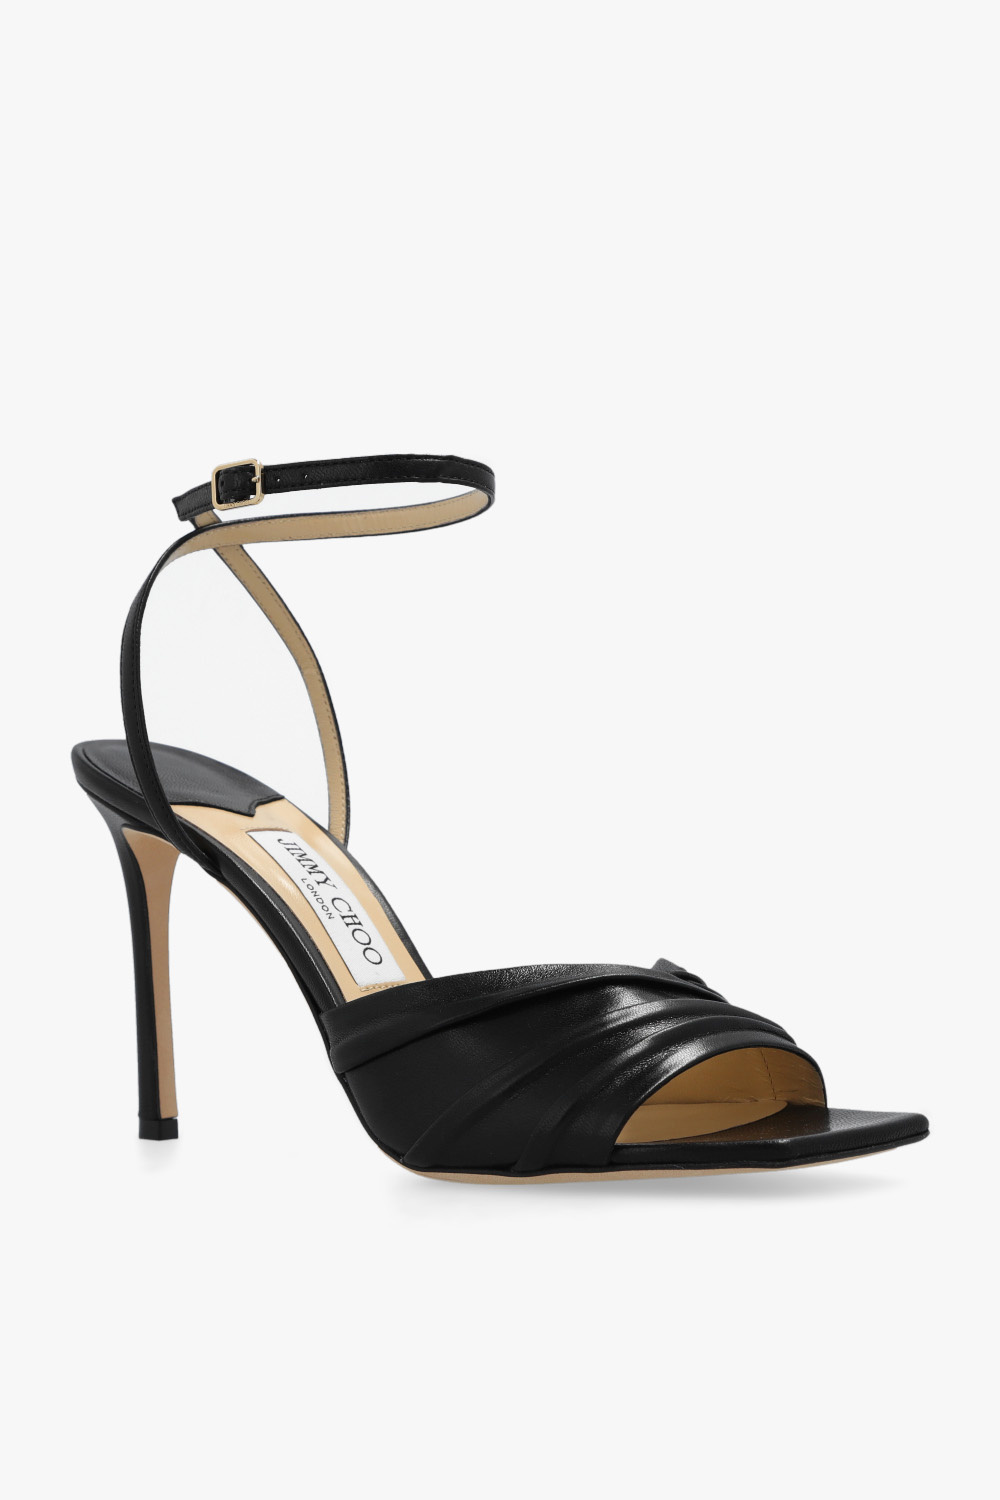 Jimmy Choo ‘Basil’ heeled leather sandals